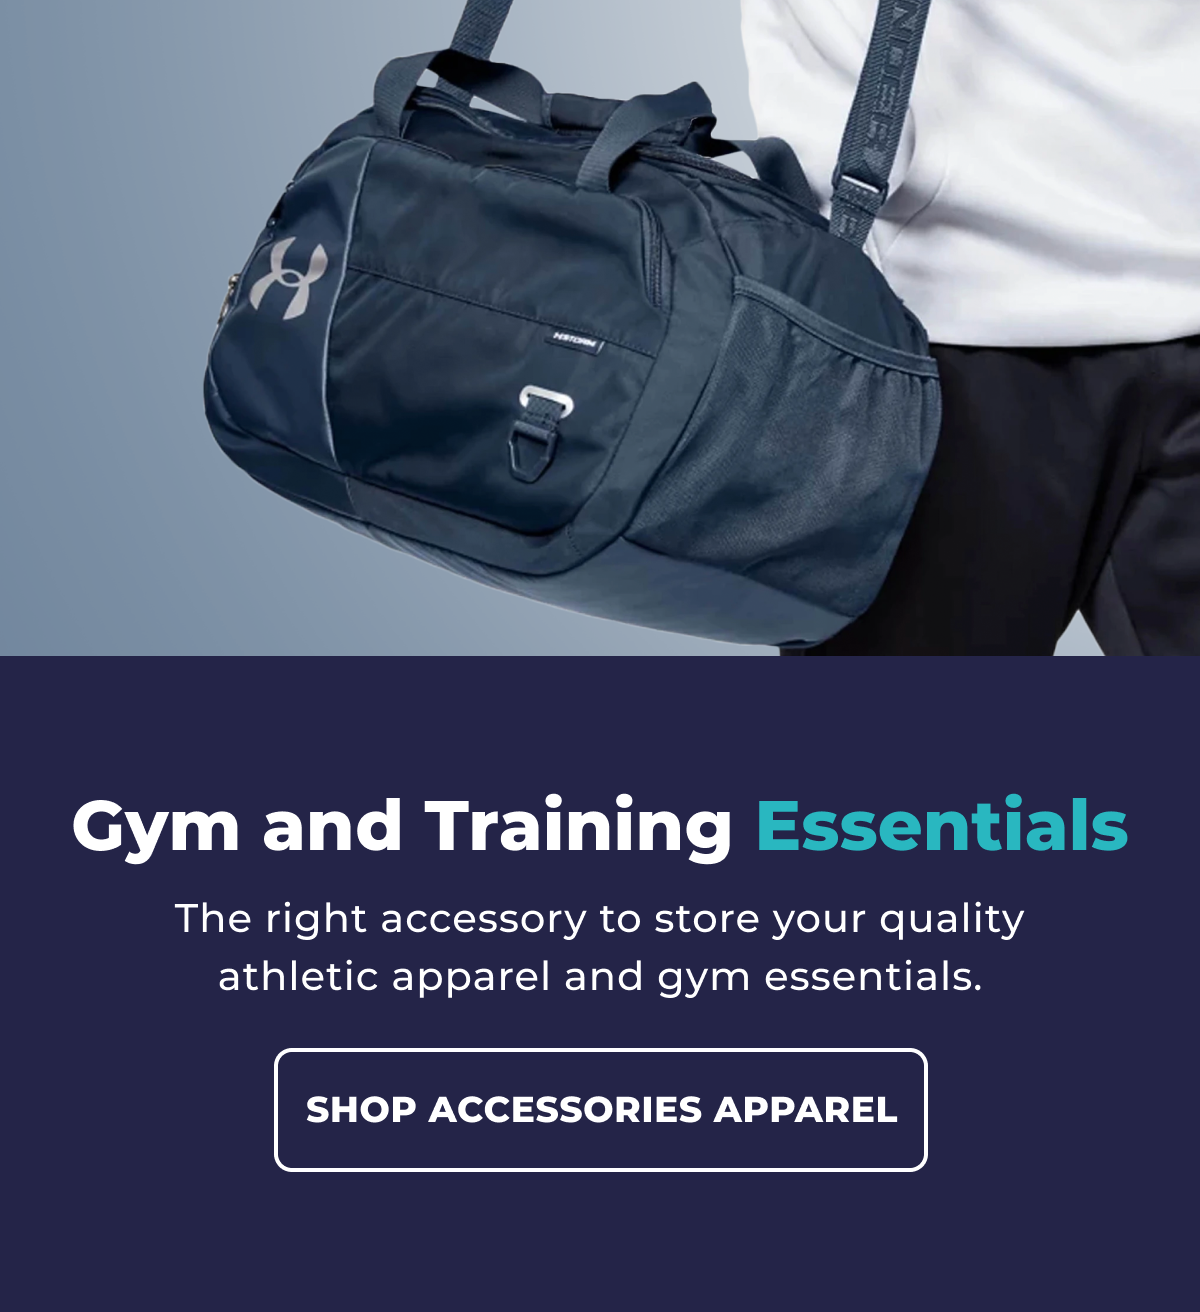 Gym and Training Essentials